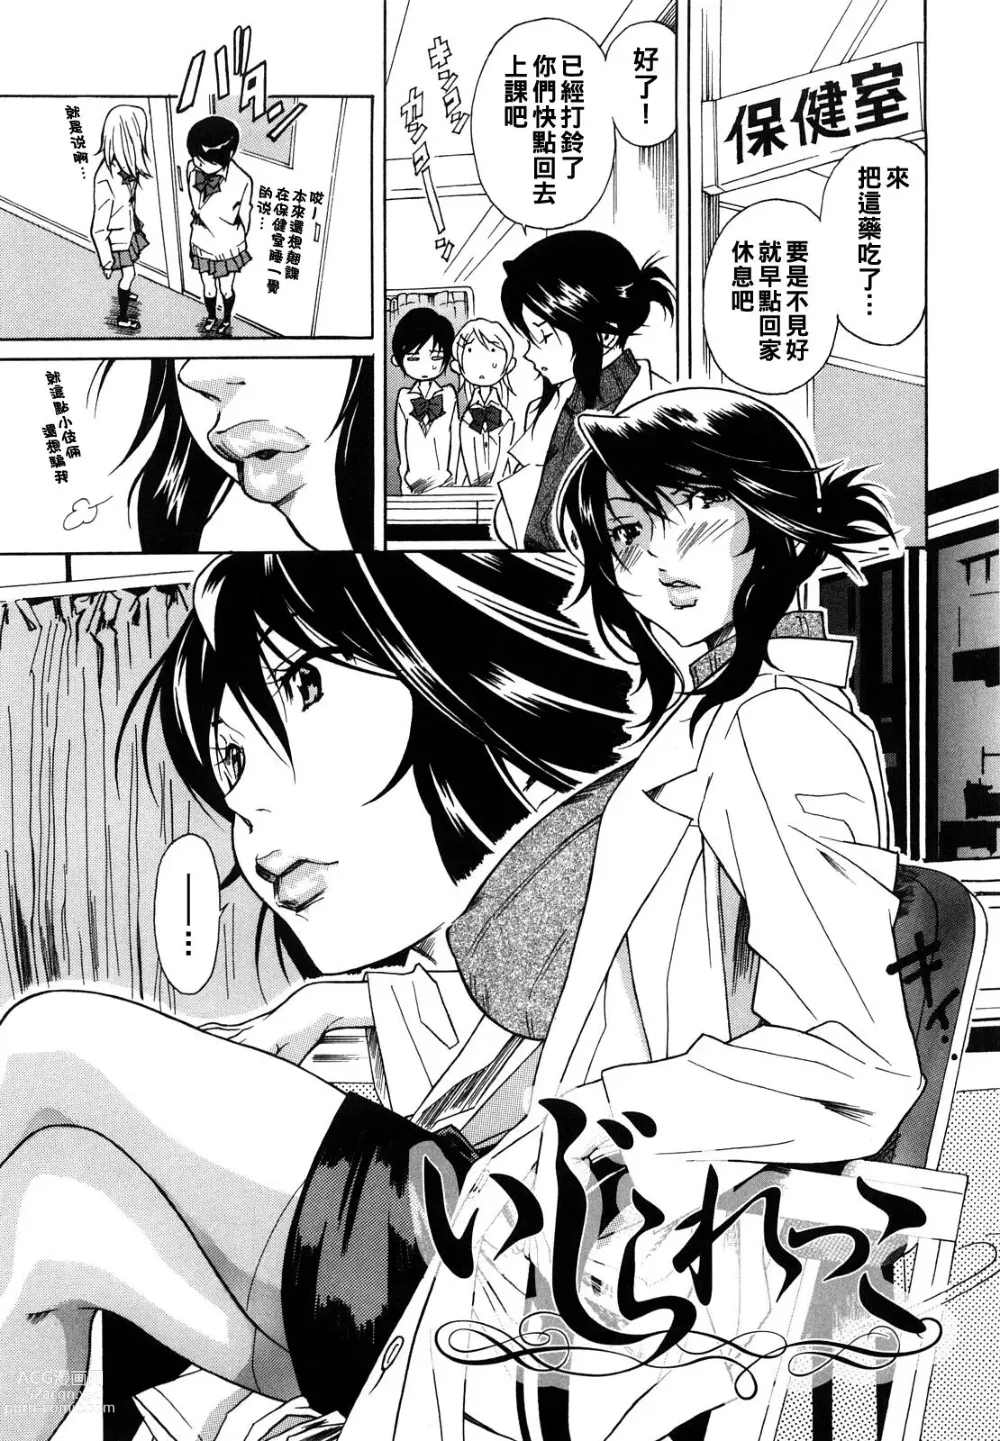 Page 1 of manga Ijirarekko